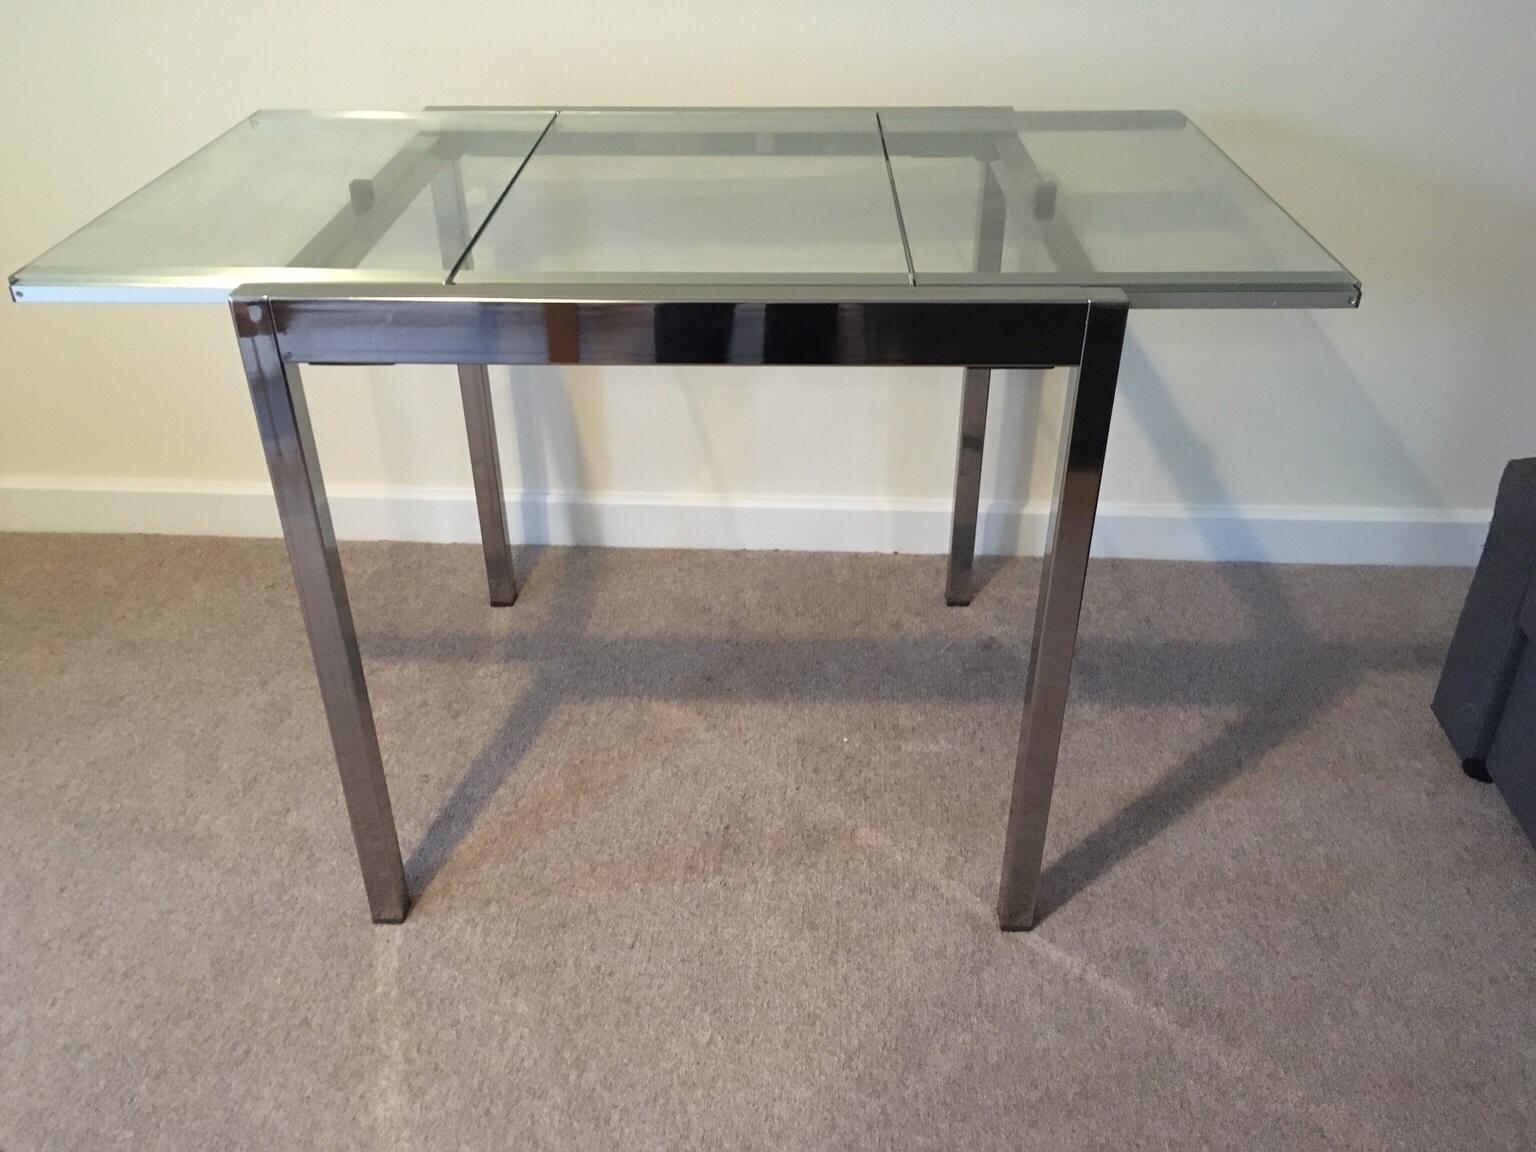 Ikea Extendable Glass Dining Table In Rh20 Horsham Fur 50 00 Zum Verkauf Shpock De